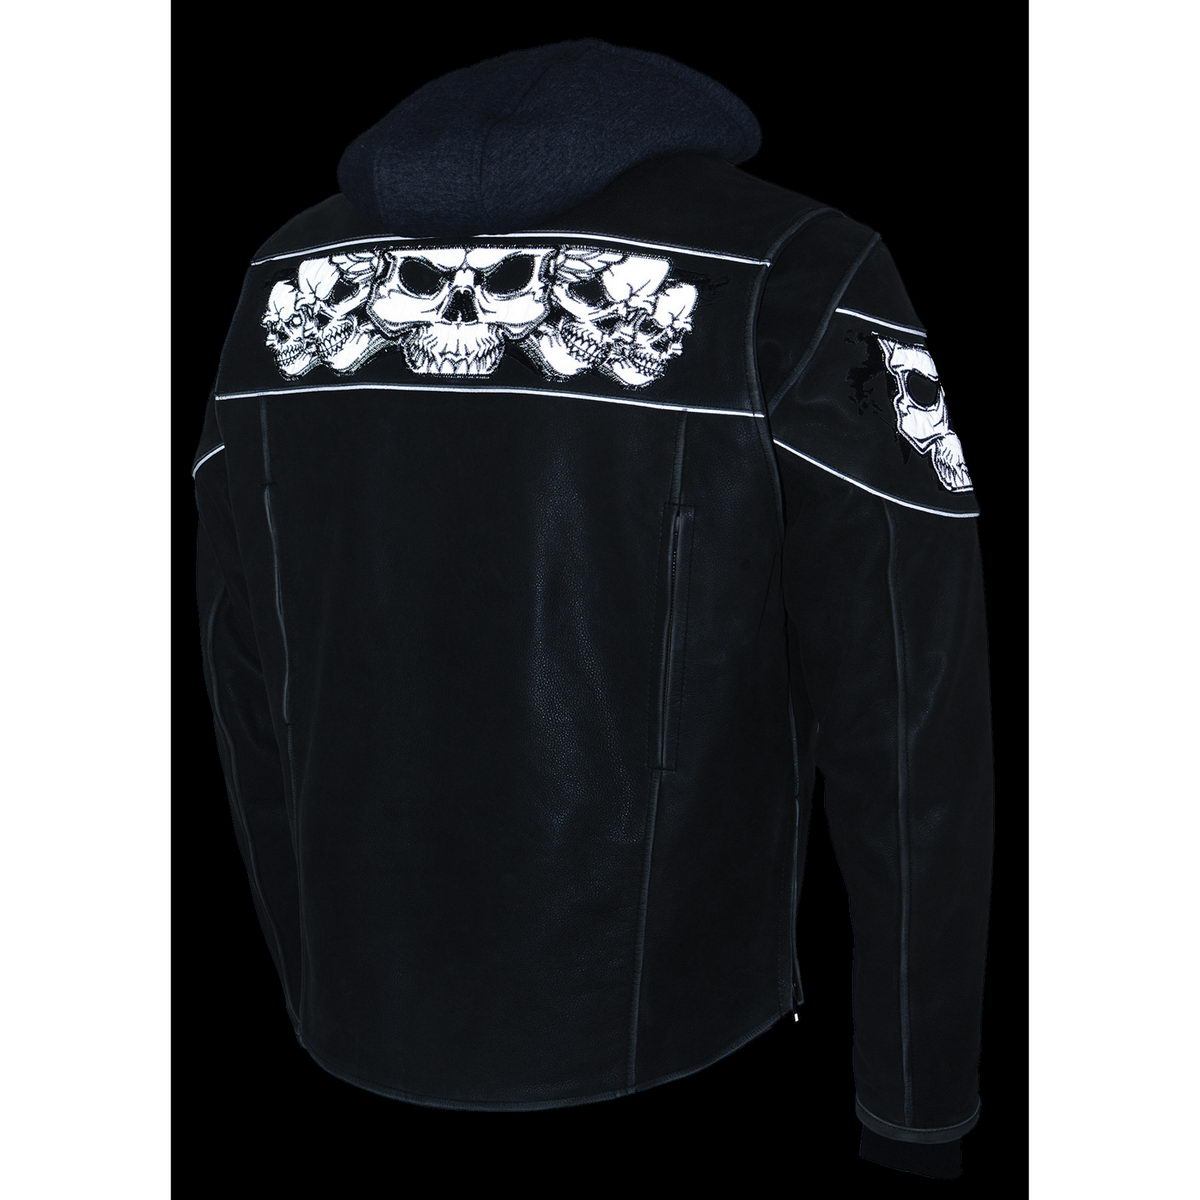 Milwaukee Leather MLM1562 Men's Distress Grey Leather Jacket with Reflective Skulls